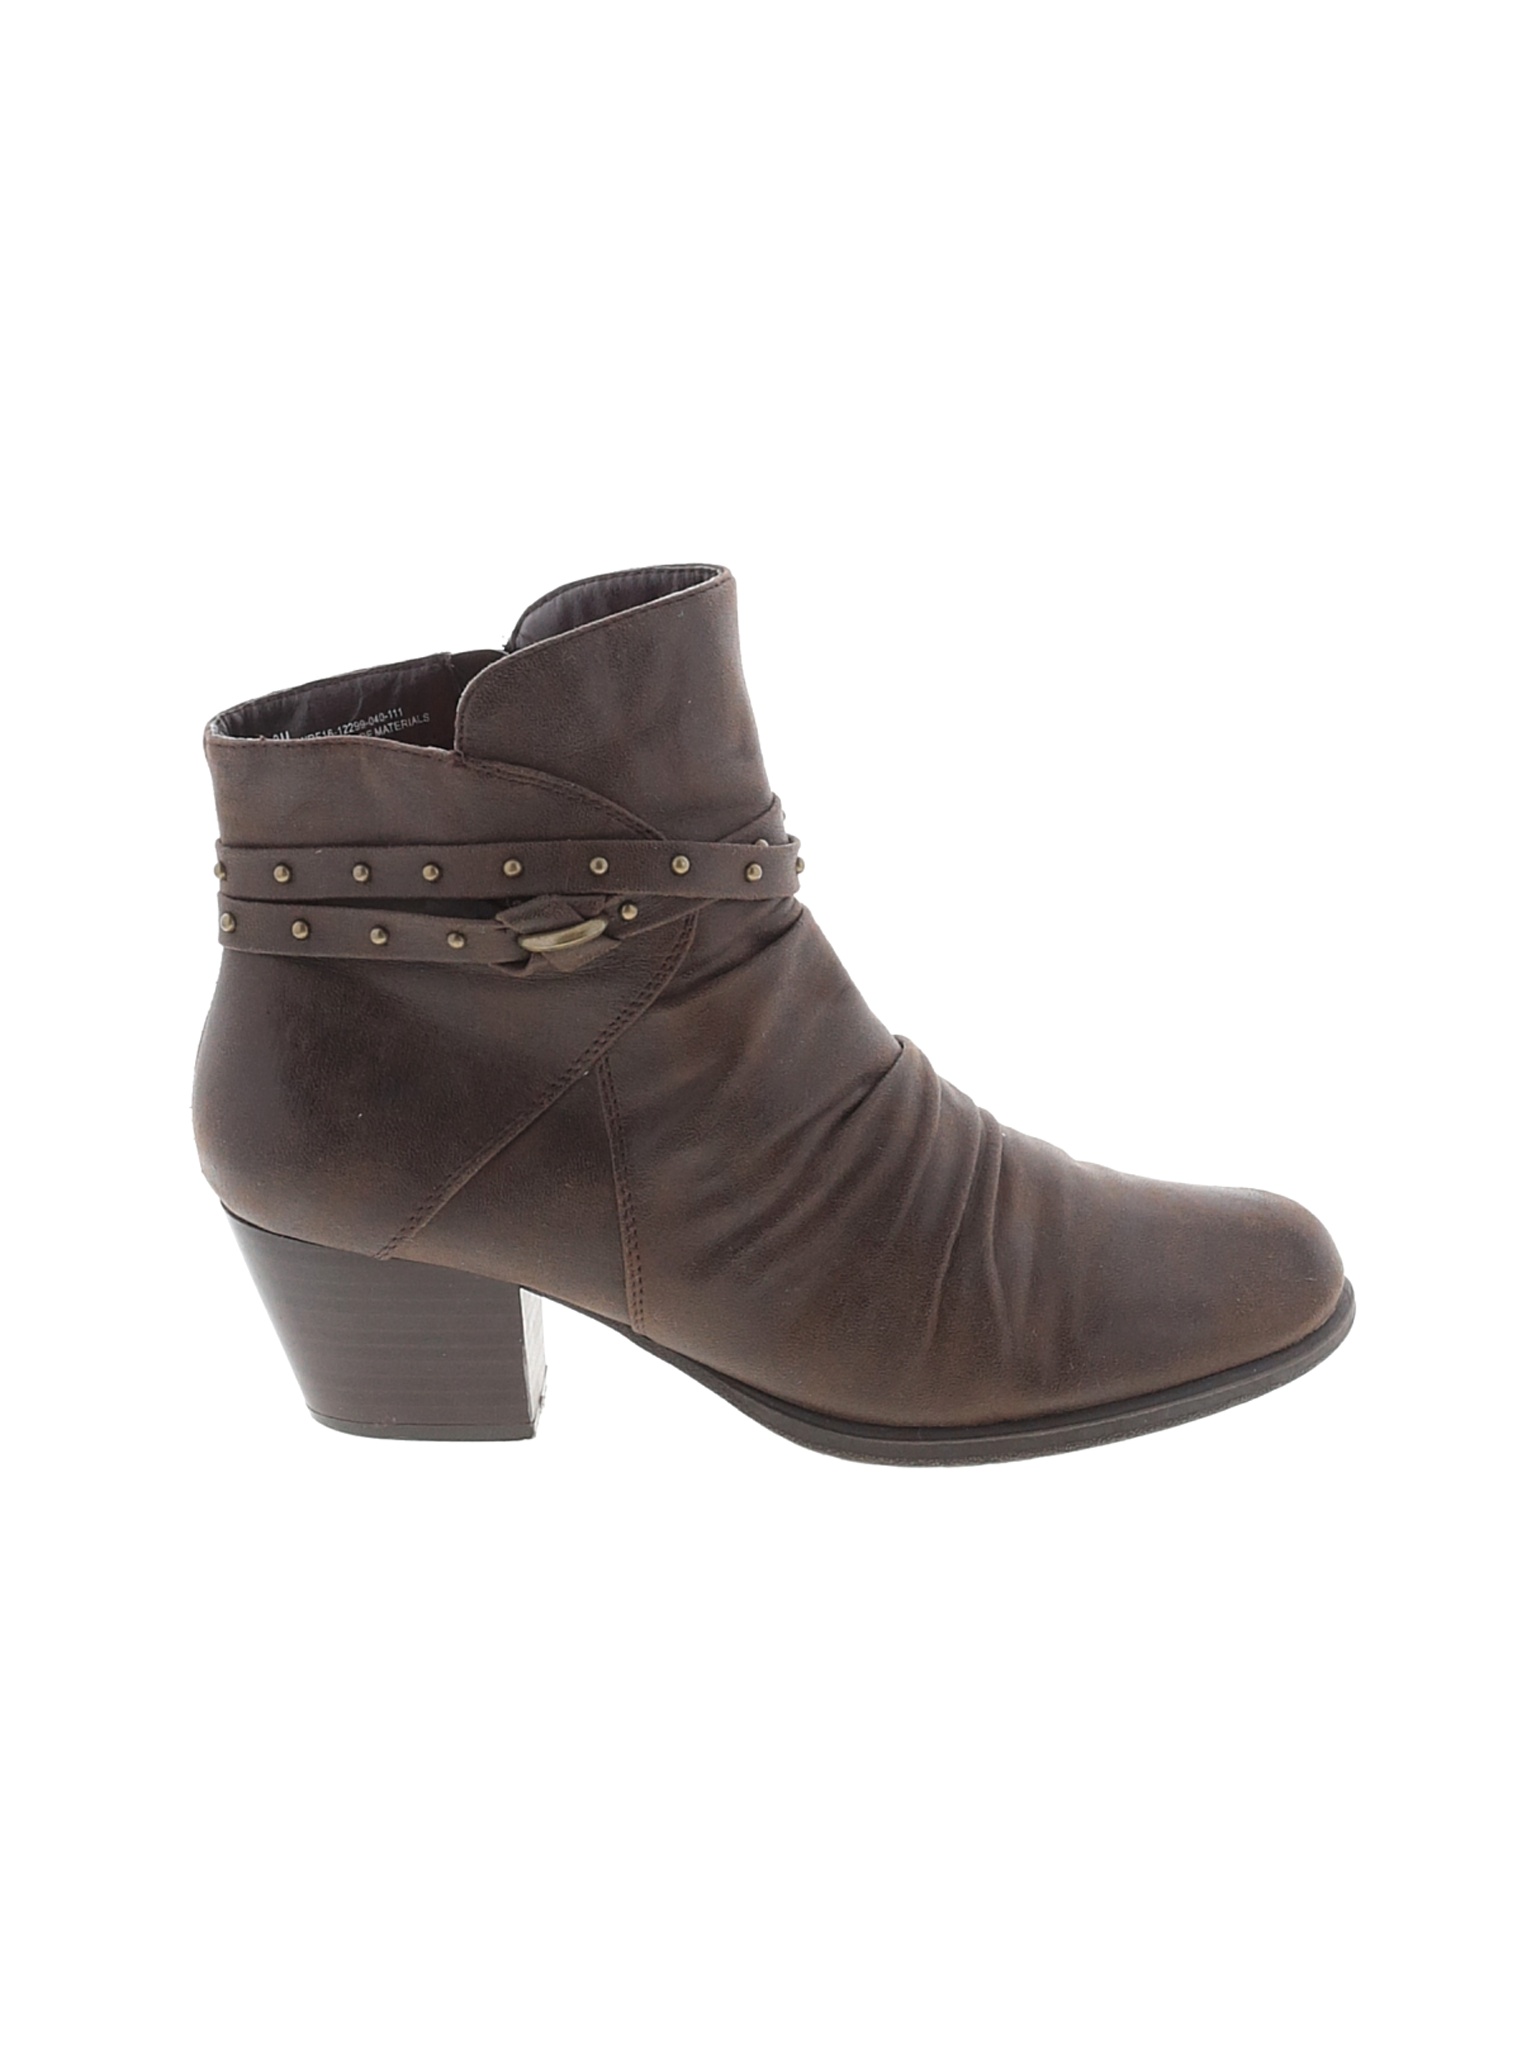 Yuu Women Brown Ankle Boots US 9 | eBay